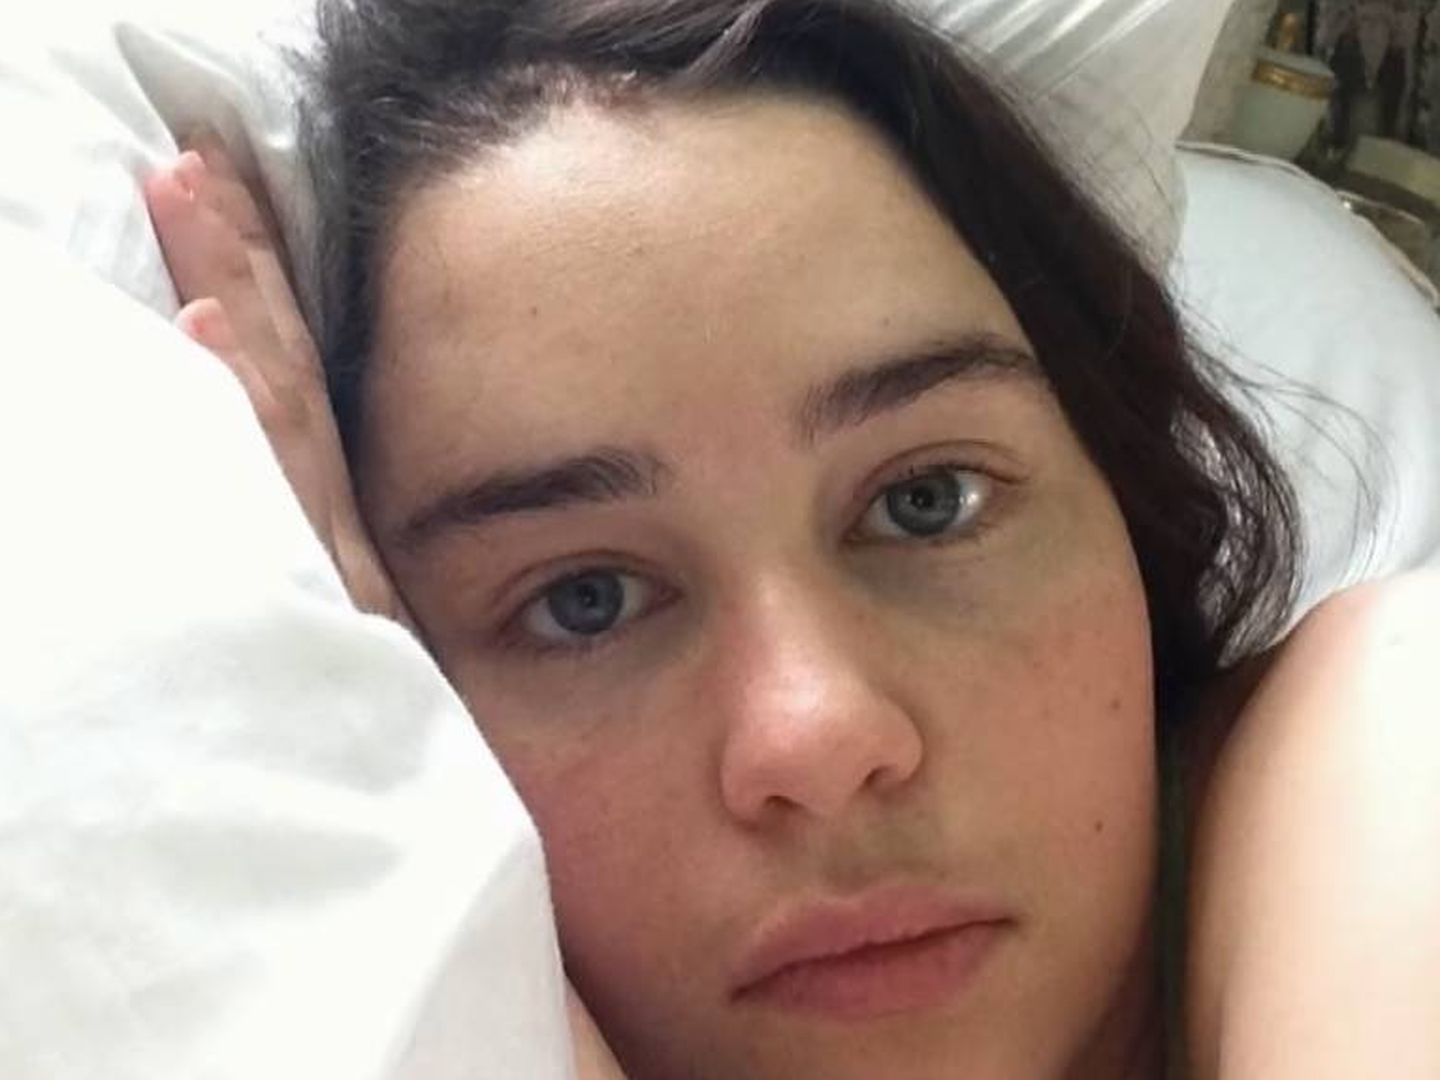 Emilia, en el hospital. (CBS This Morning/Youtube)